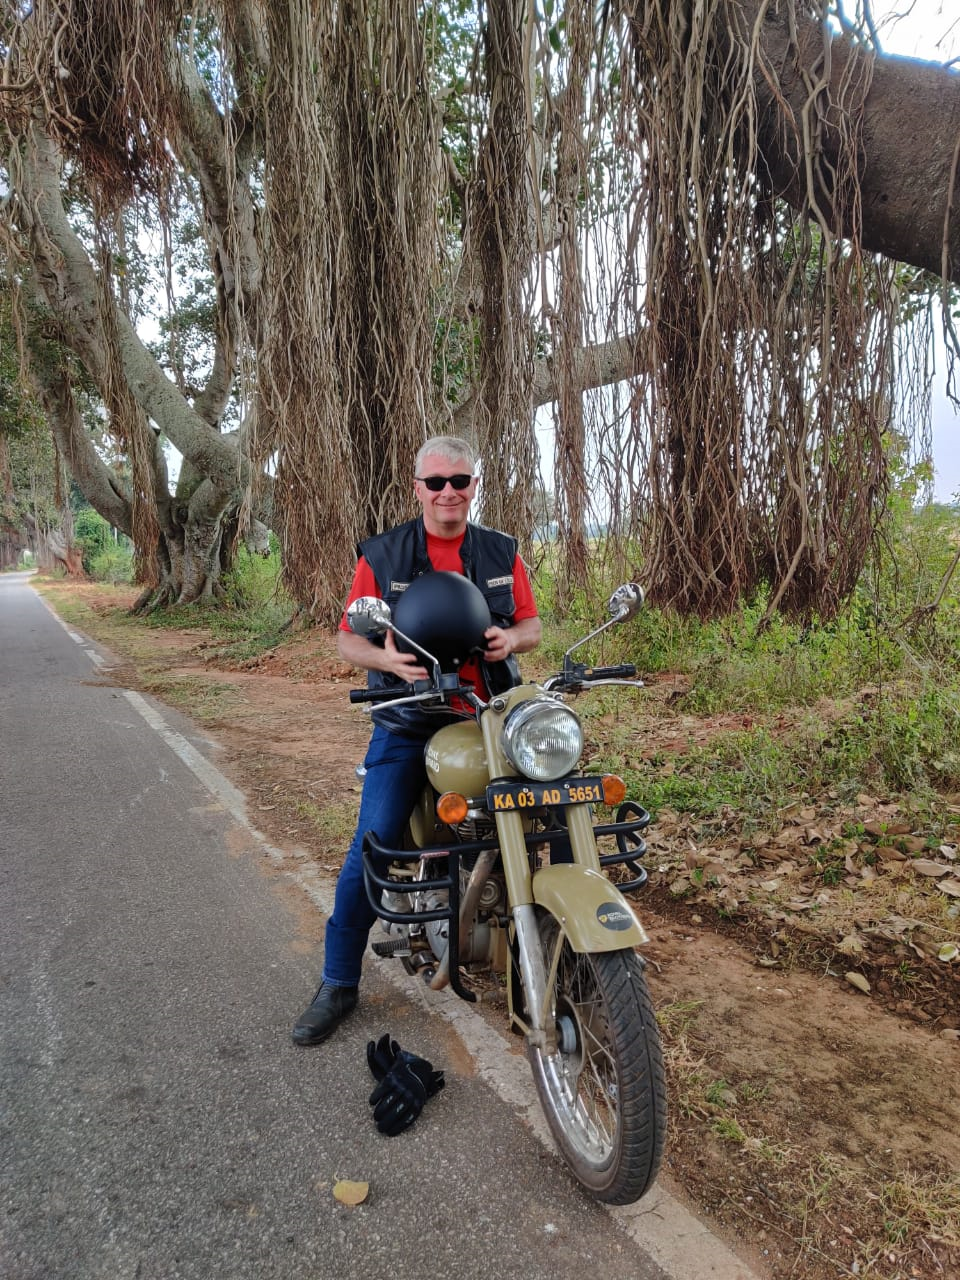 Didier Bassleer during a motorbike ride in India